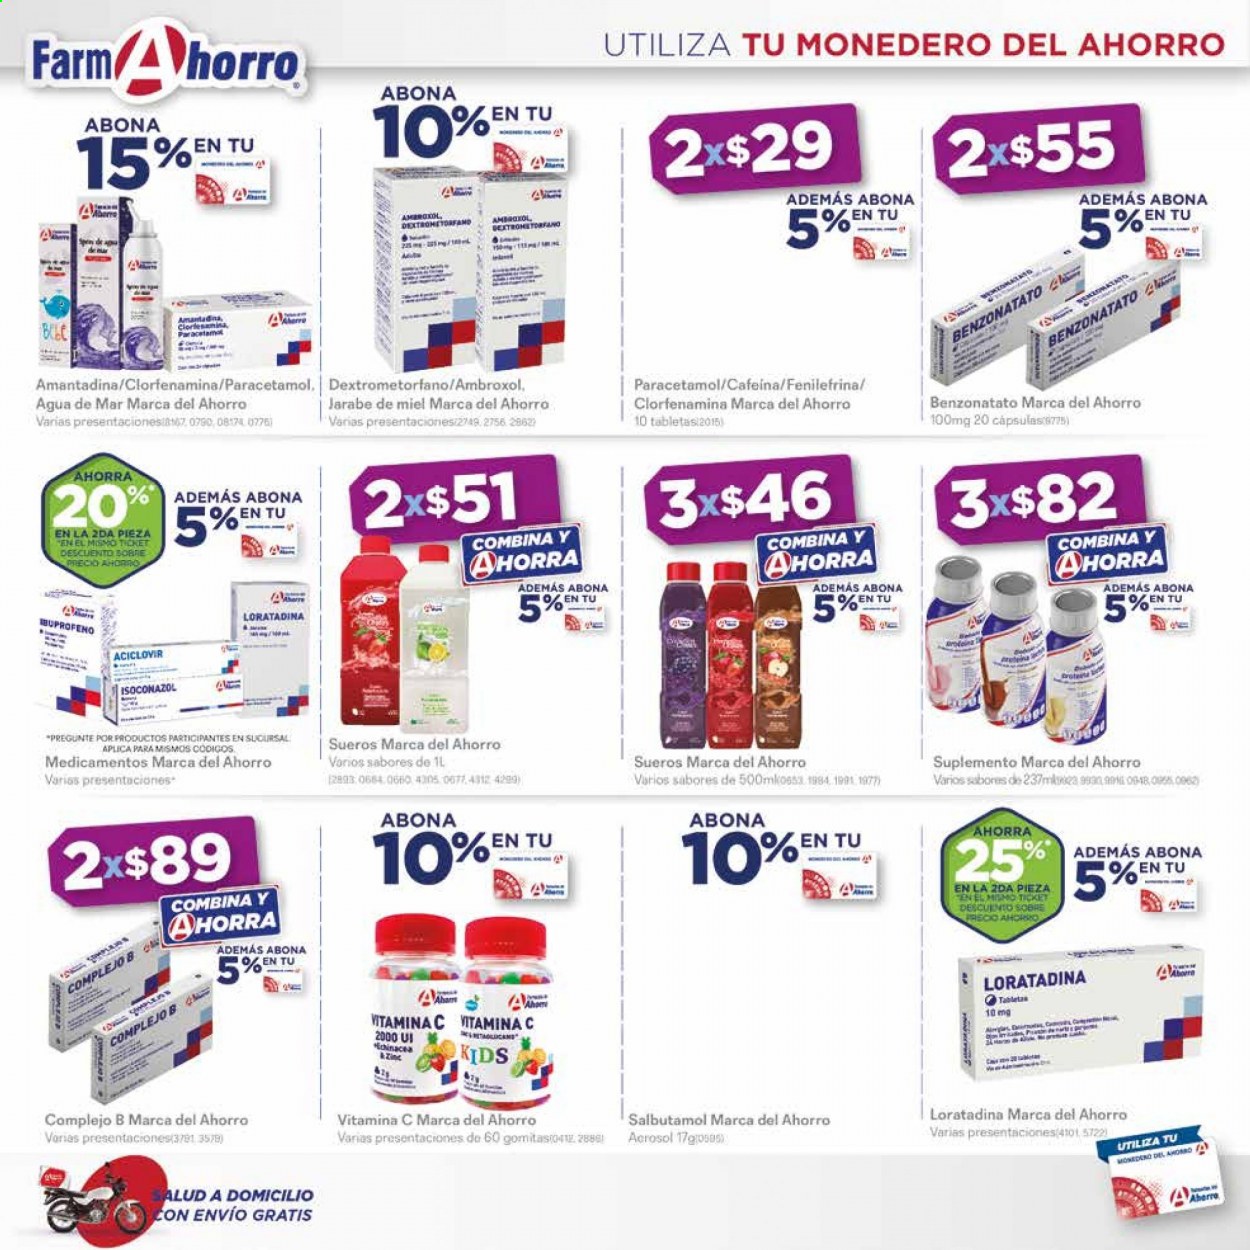 thumbnail - Folleto actual Farmacias del Ahorro - 1.1.2021 - 31.1.2021 - Ventas - Ambroxol, Paracetamol, Aciclovir, járabe, Benzonatato. Página 12.